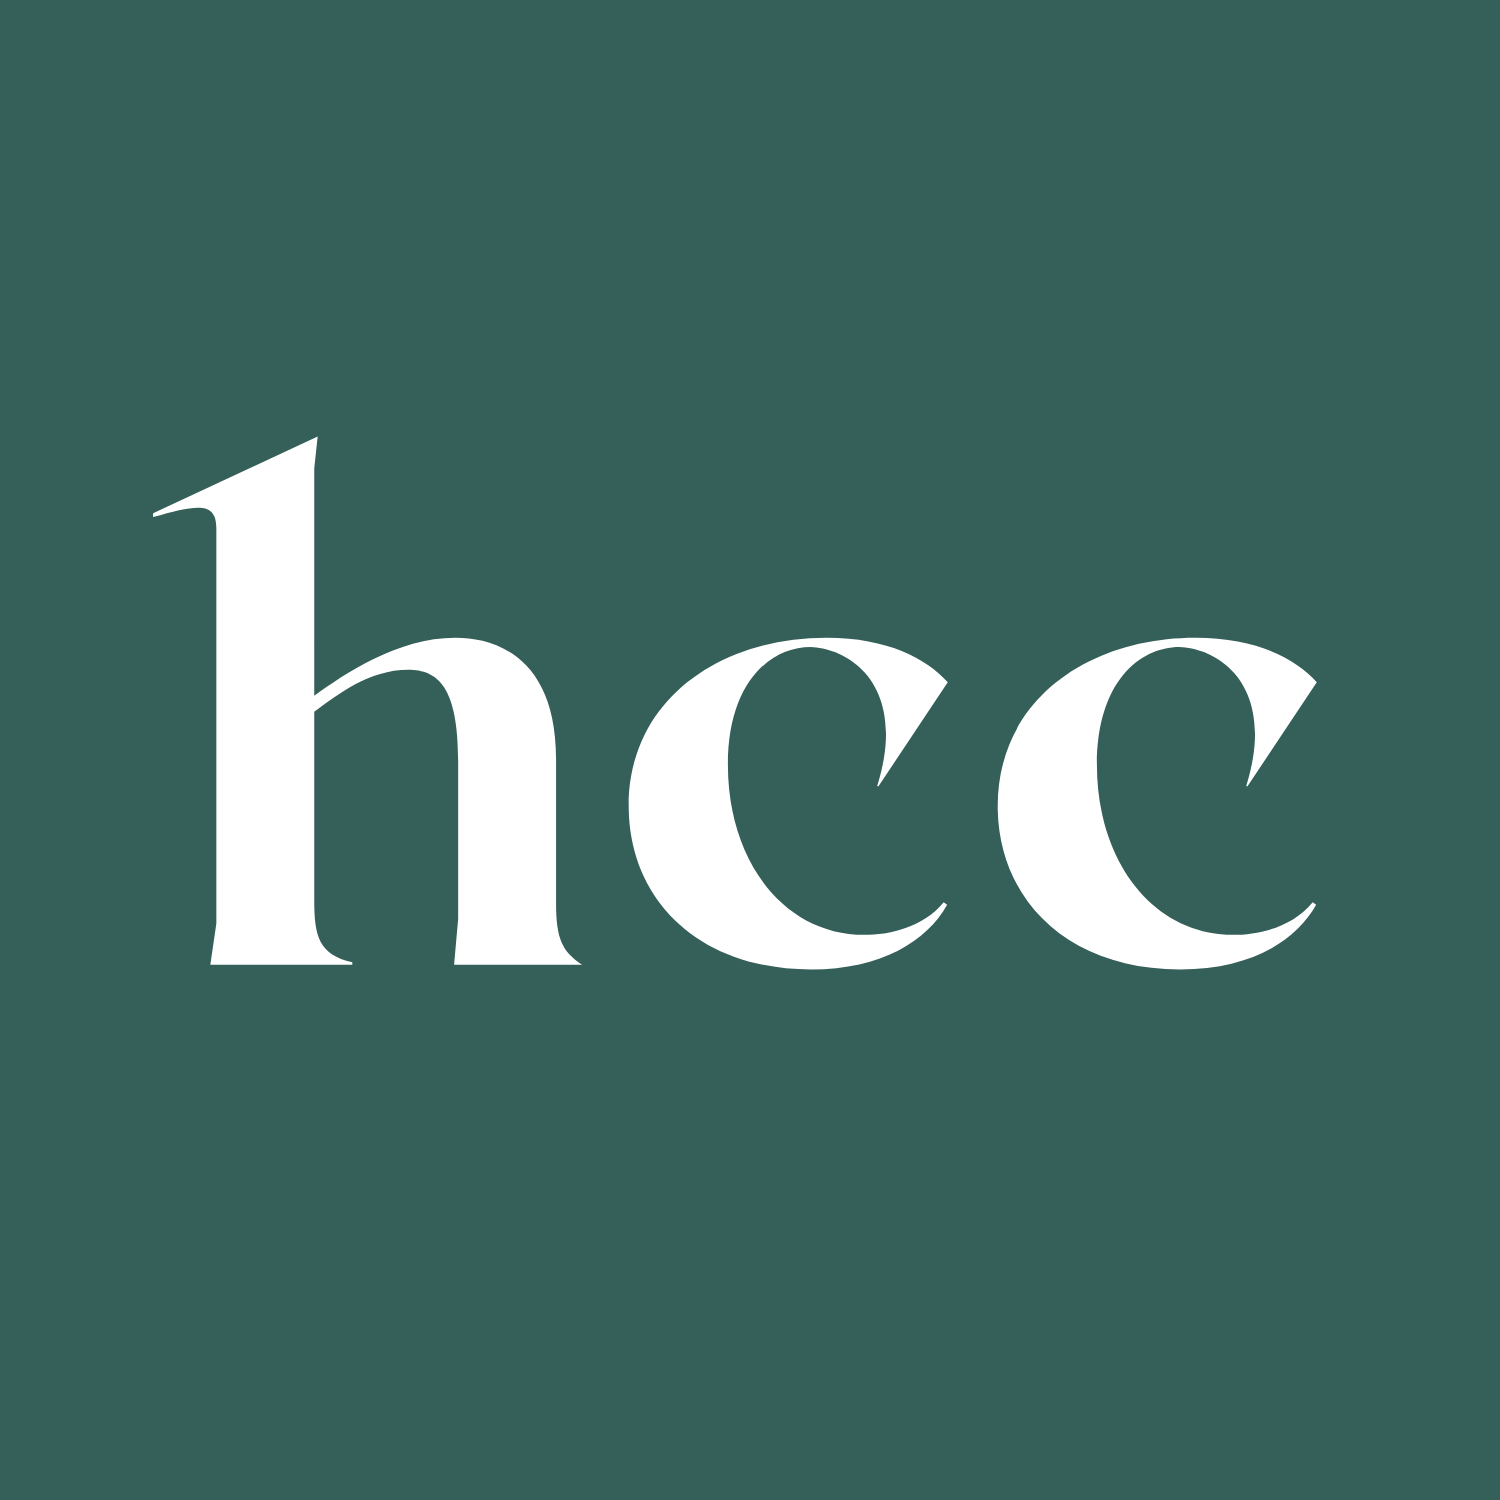 HCC | Health Care Construction